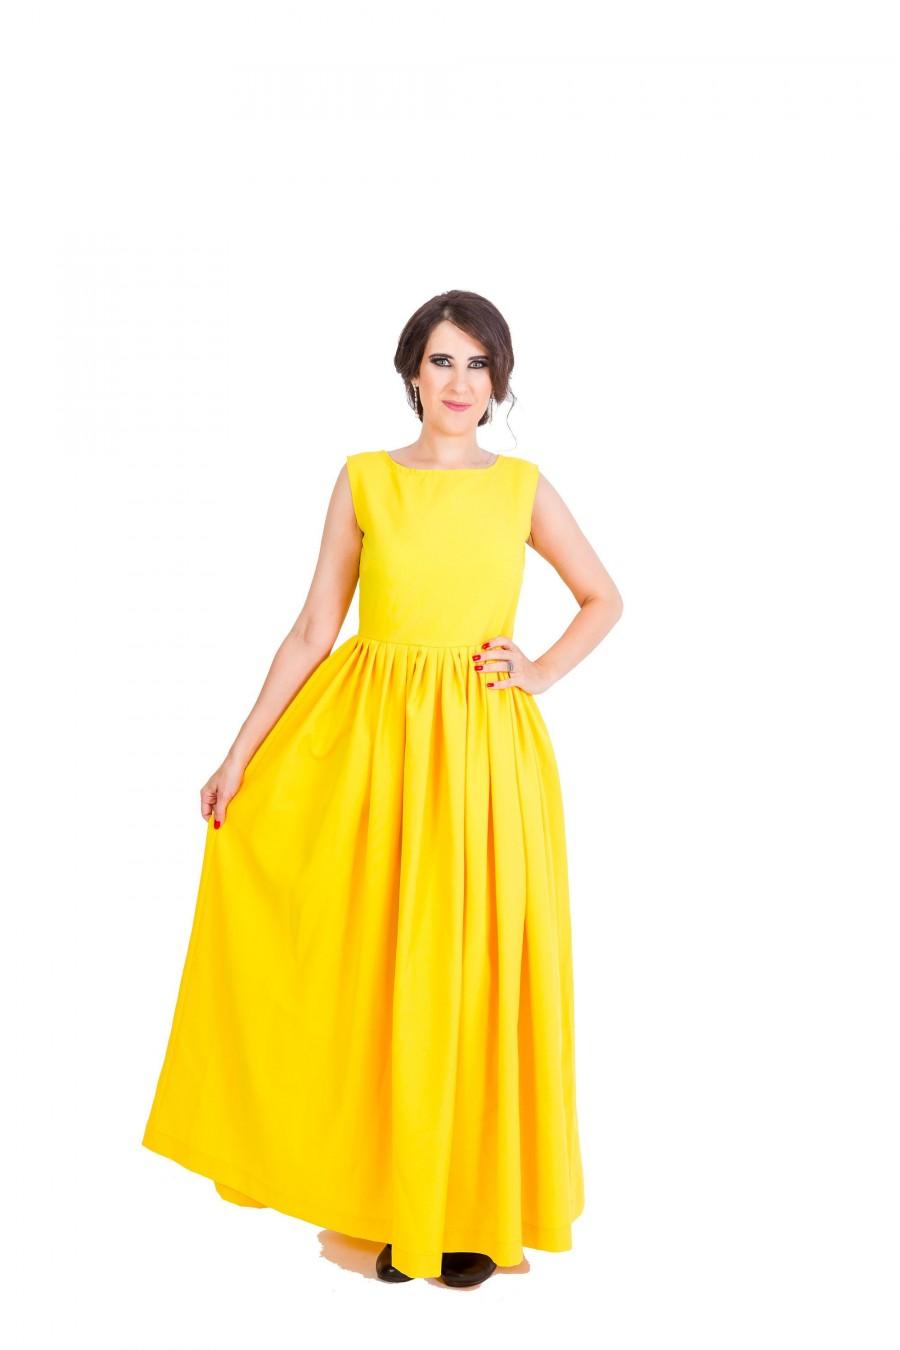 زفاف - Womens Dress, Long Dress, Maxi Dress, Yellow Dress, Round Neck Dress, Sleeveless Dress, Pleated Dress, Party Dress, Evening Dress